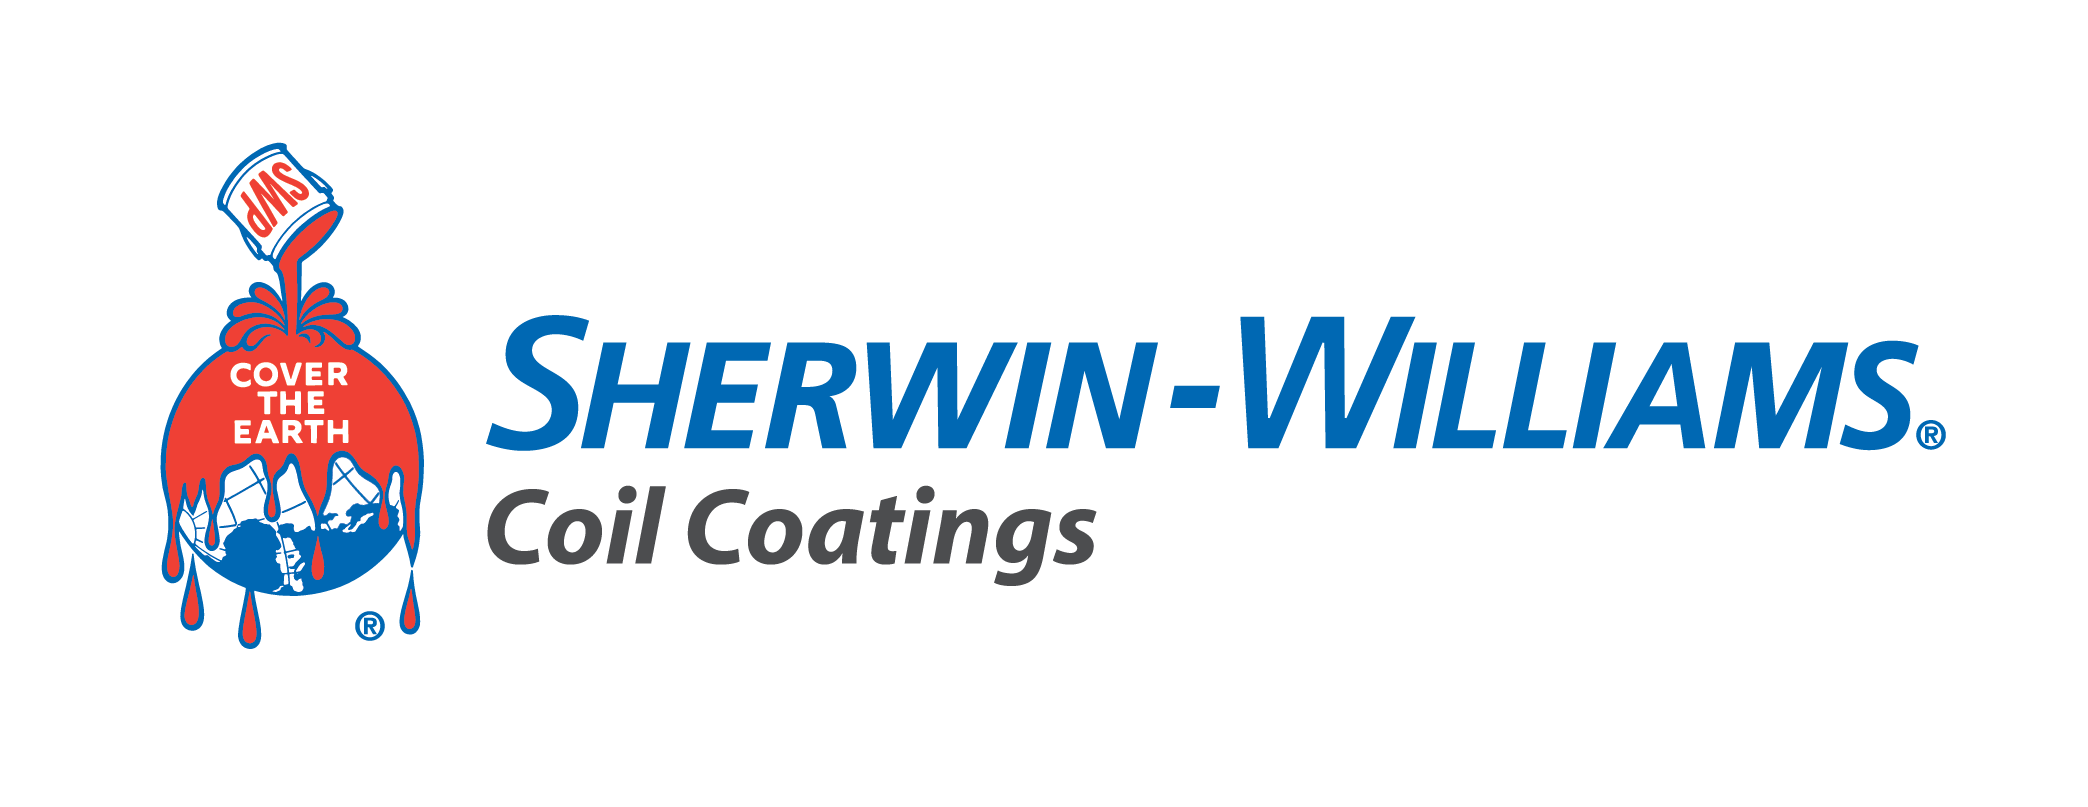 Sherwin-Williams Coil Coatings